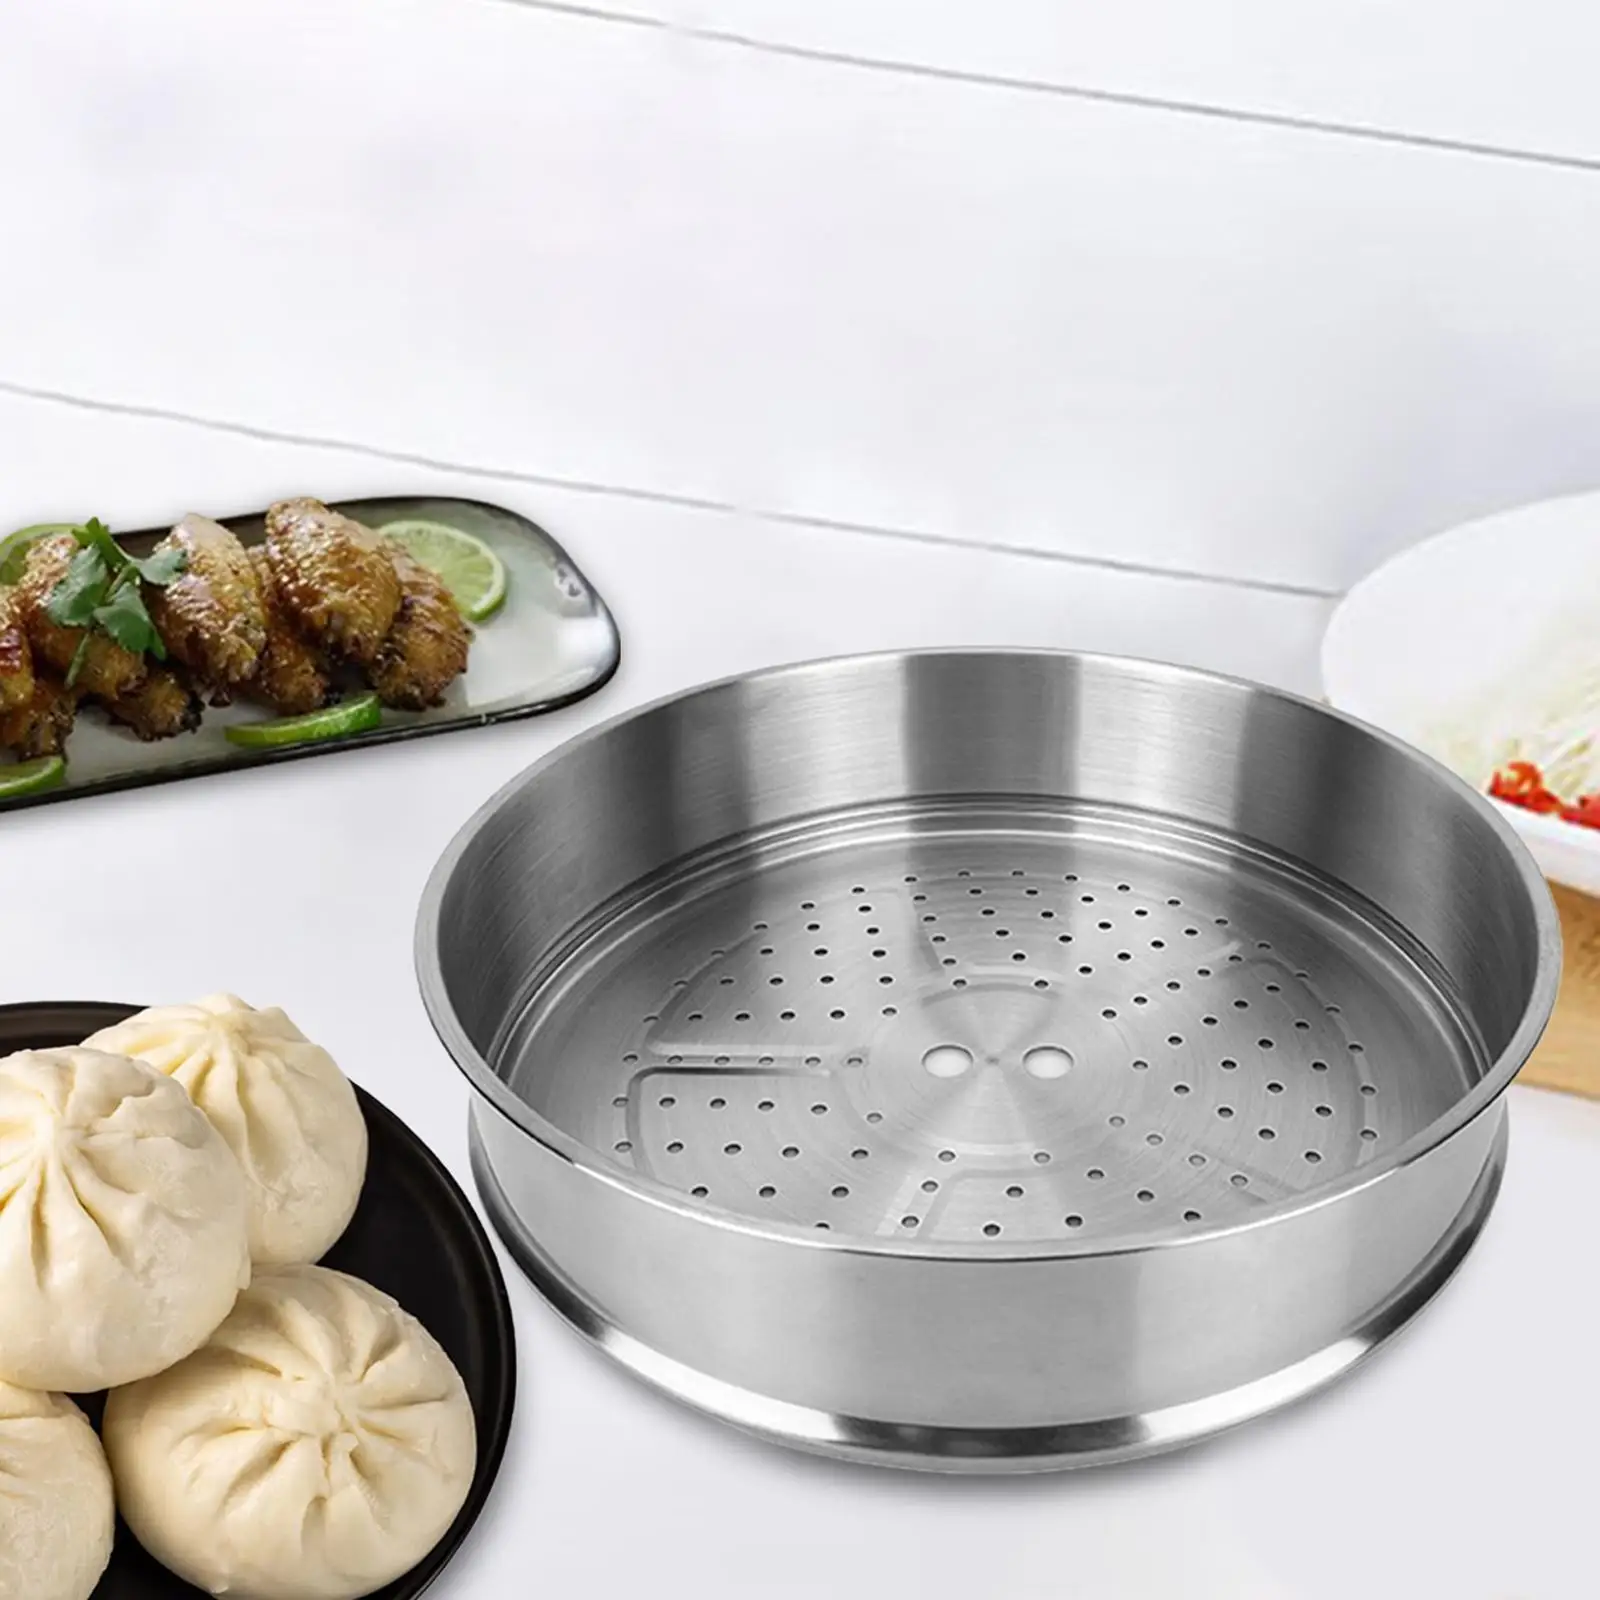 Stainless Steel Steamer Basket Vegetable Food Steamer Cookware for Kitchen